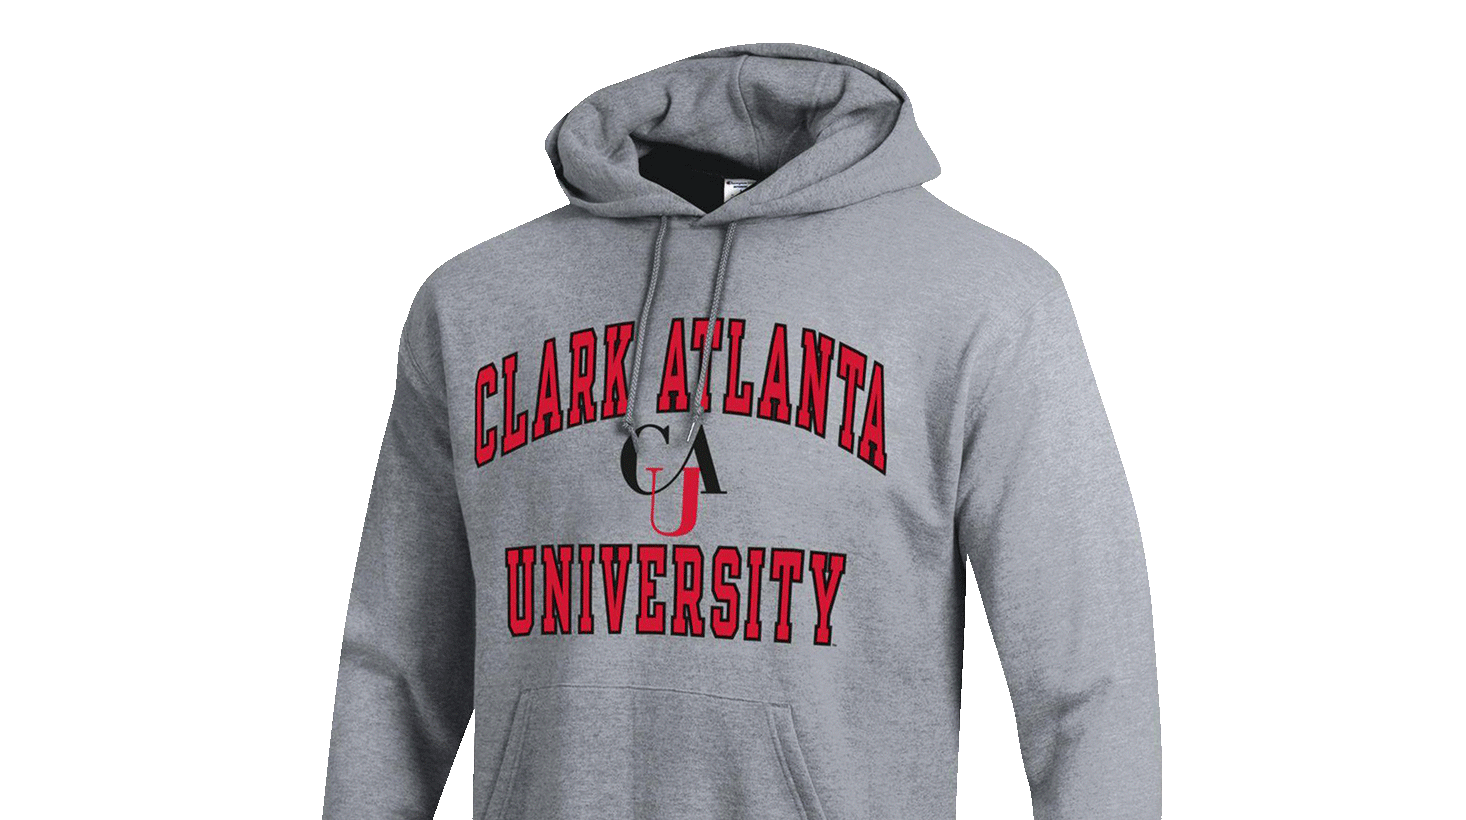 Clark Atlanta University Campus Store Apparel, Merchandise, & Gifts